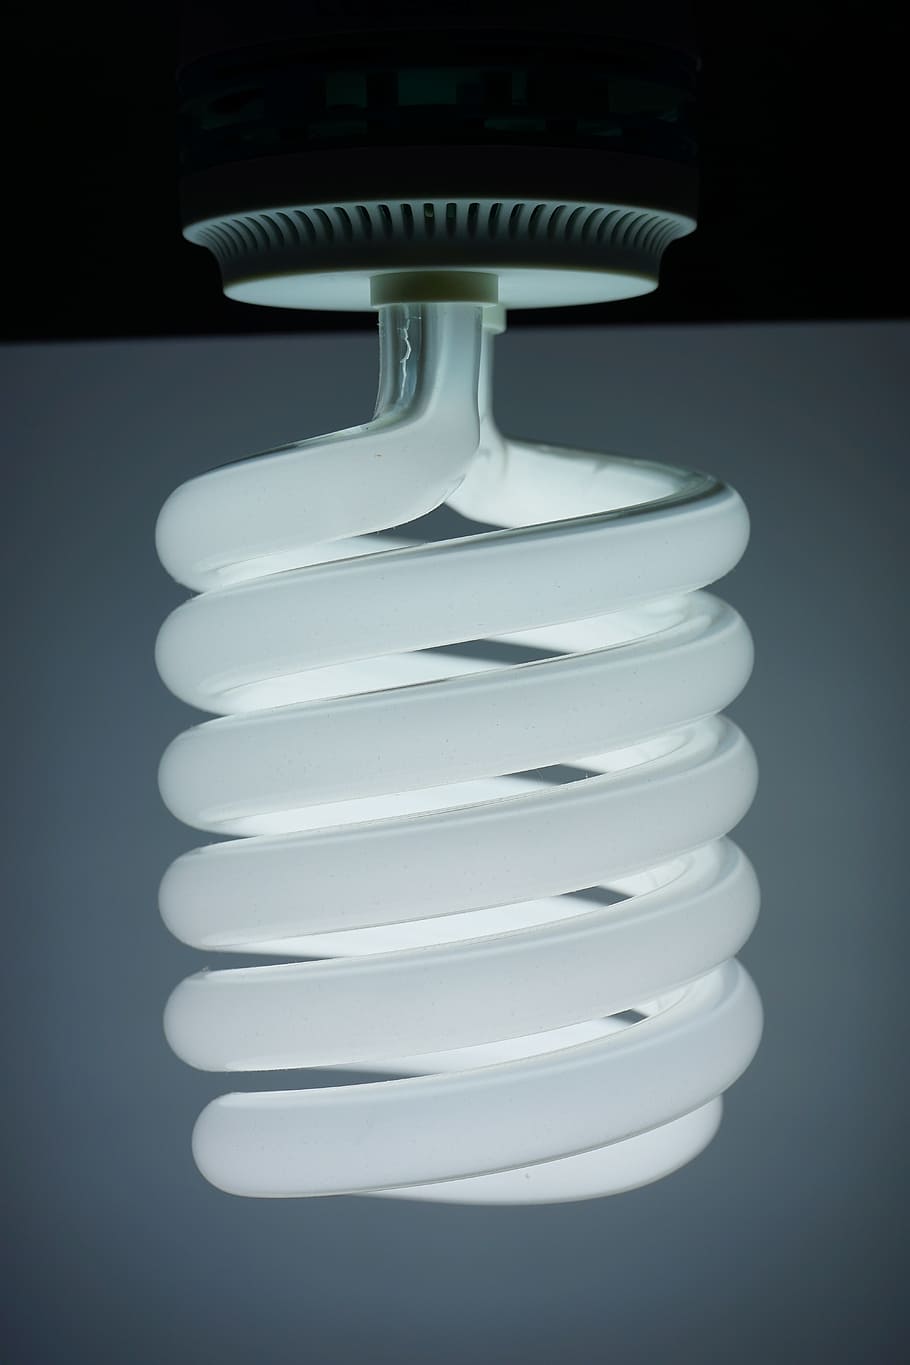 energiesparlampe, lamp, bulbs, lighting, light, light bulb, compact fluorescent lamp, lighting medium, energy saving, fluorescent lighting